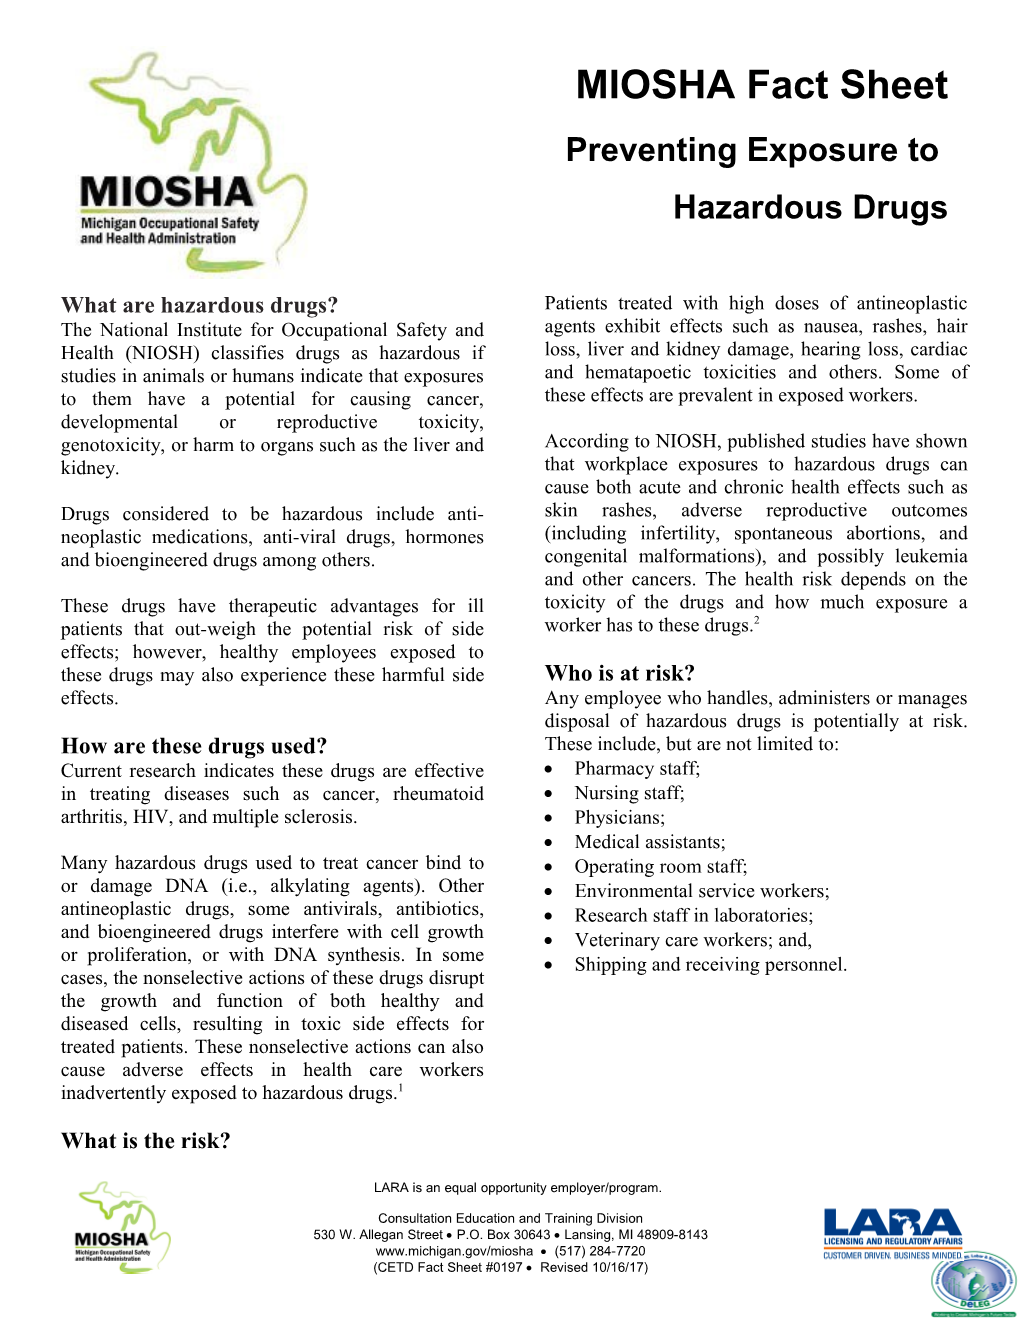 Preventing Exposure to Hazardous Drugs